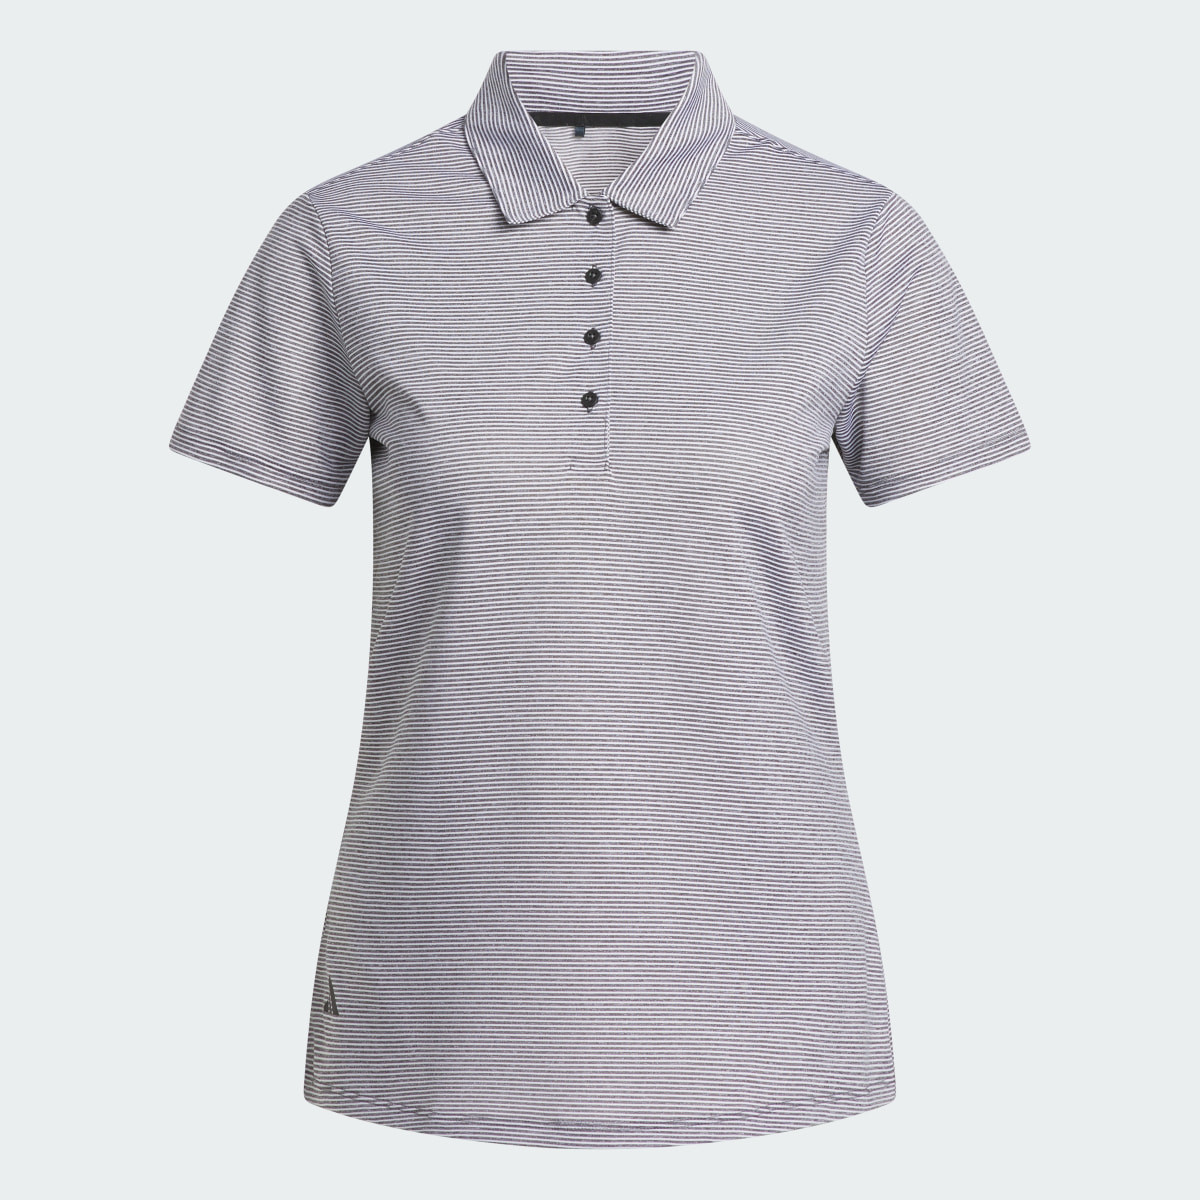 Adidas Women's Ottoman Short Sleeve Polo Shirt. 5